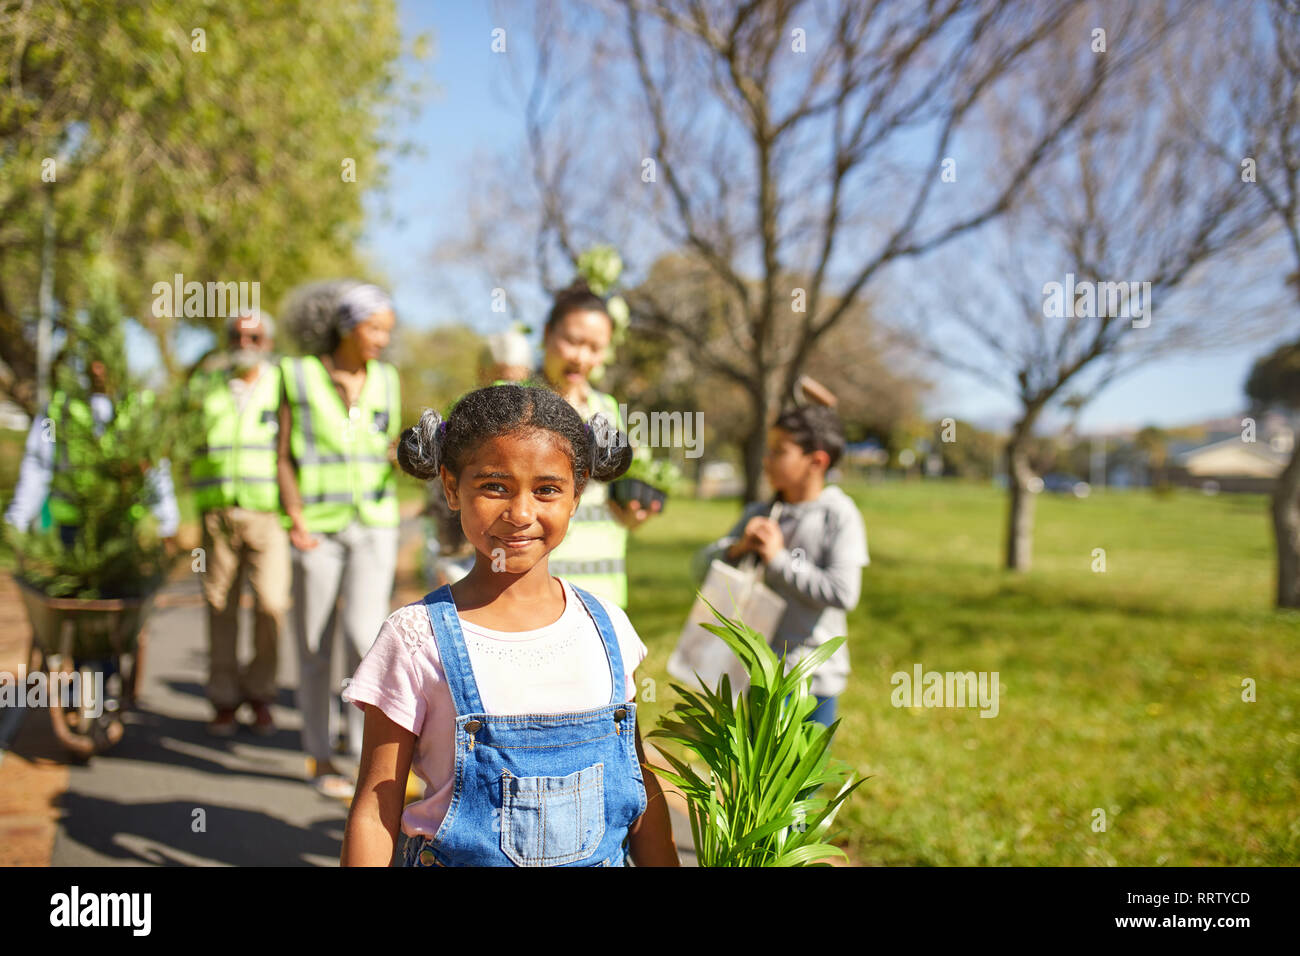 Portrait smiling, confident girl volunteering, planting trees in sunny park Stock Photo